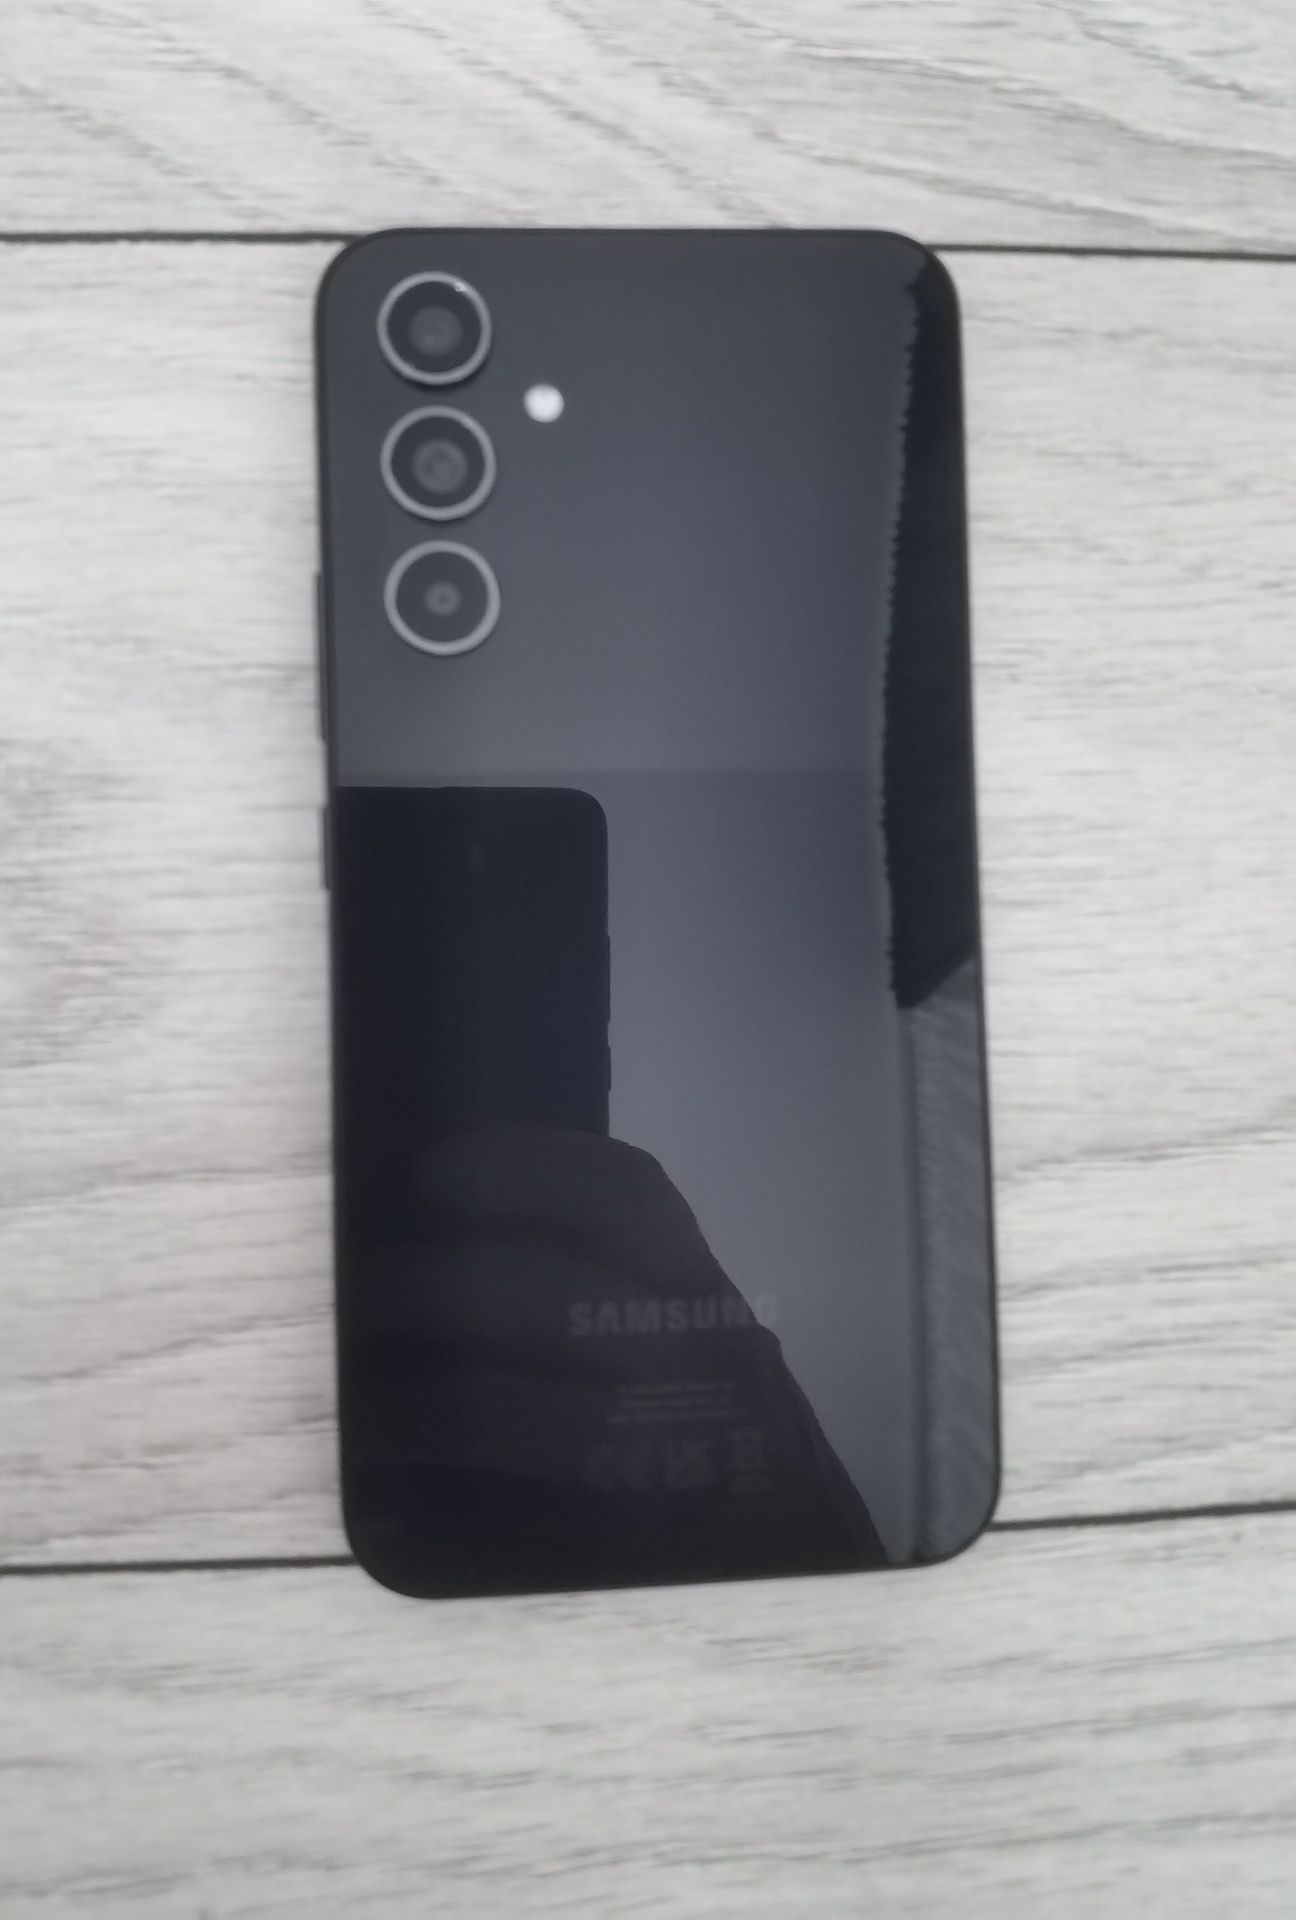 Samsung Galaxy A54 nou